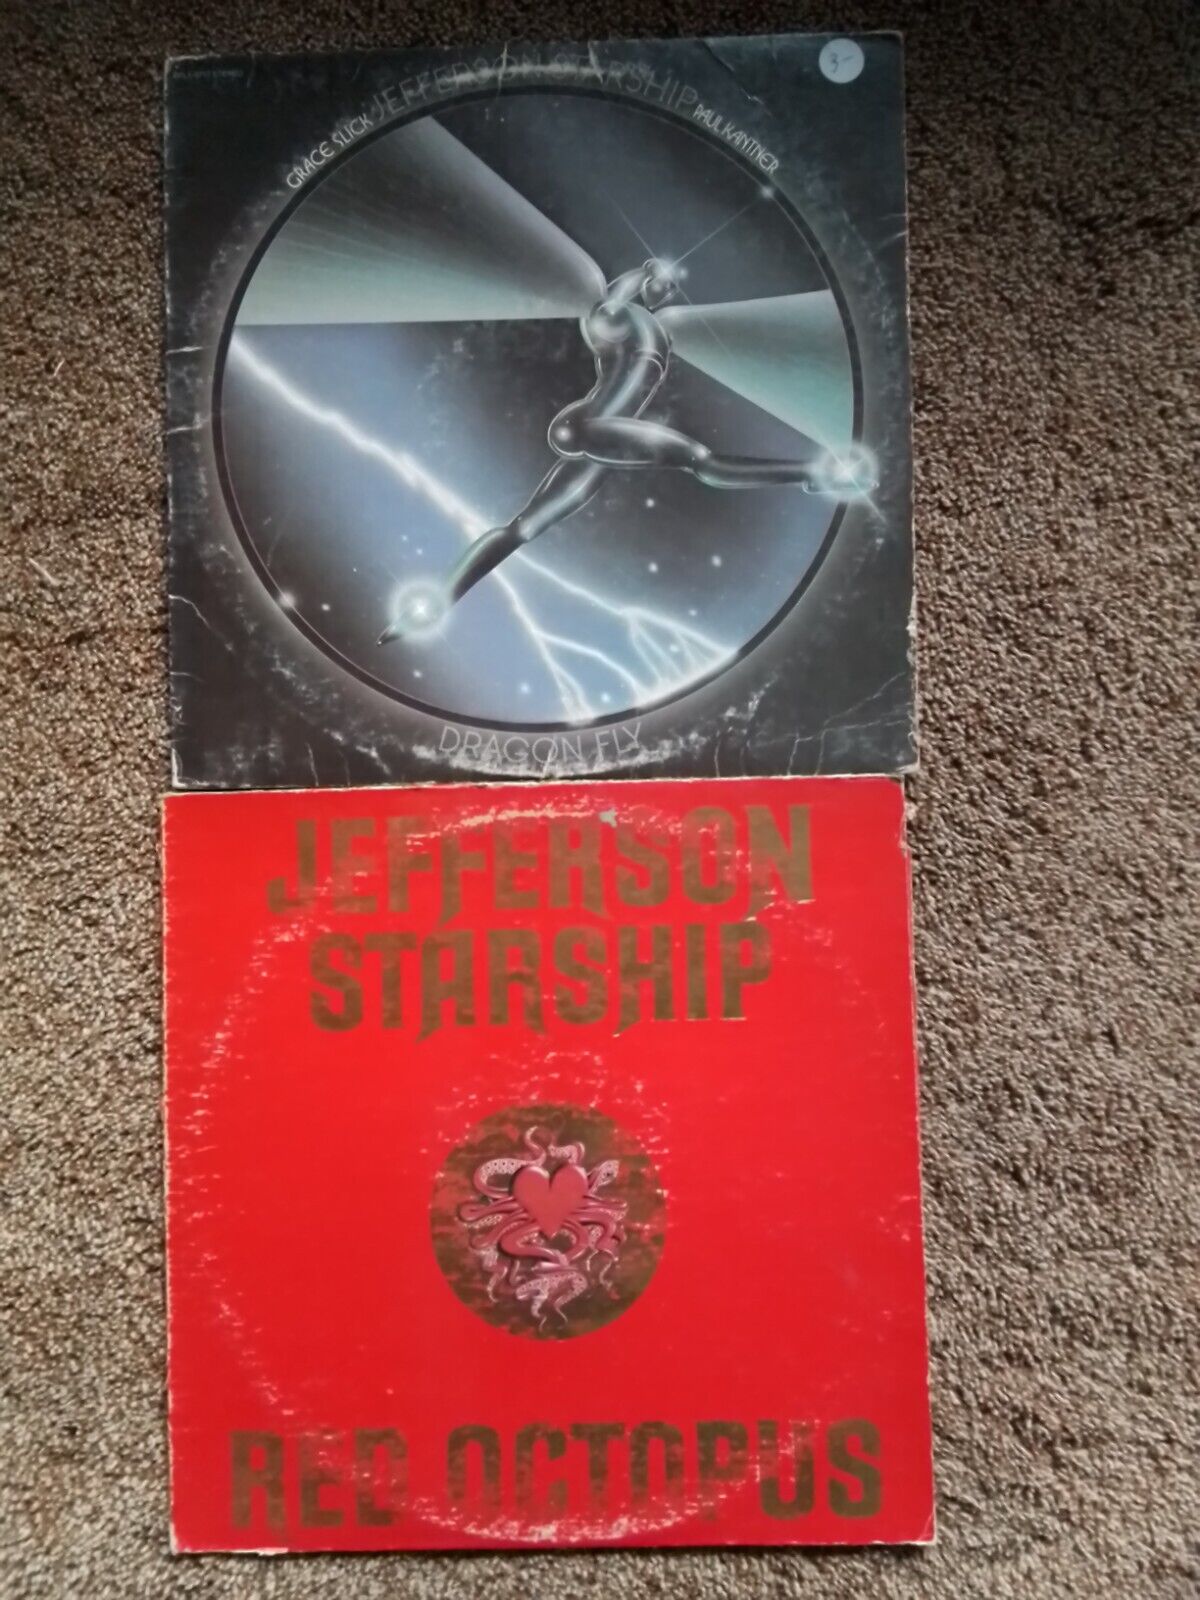 TWO VINTAGE JEFFERSON STARSHIP VINYL RECORD ALBUMS